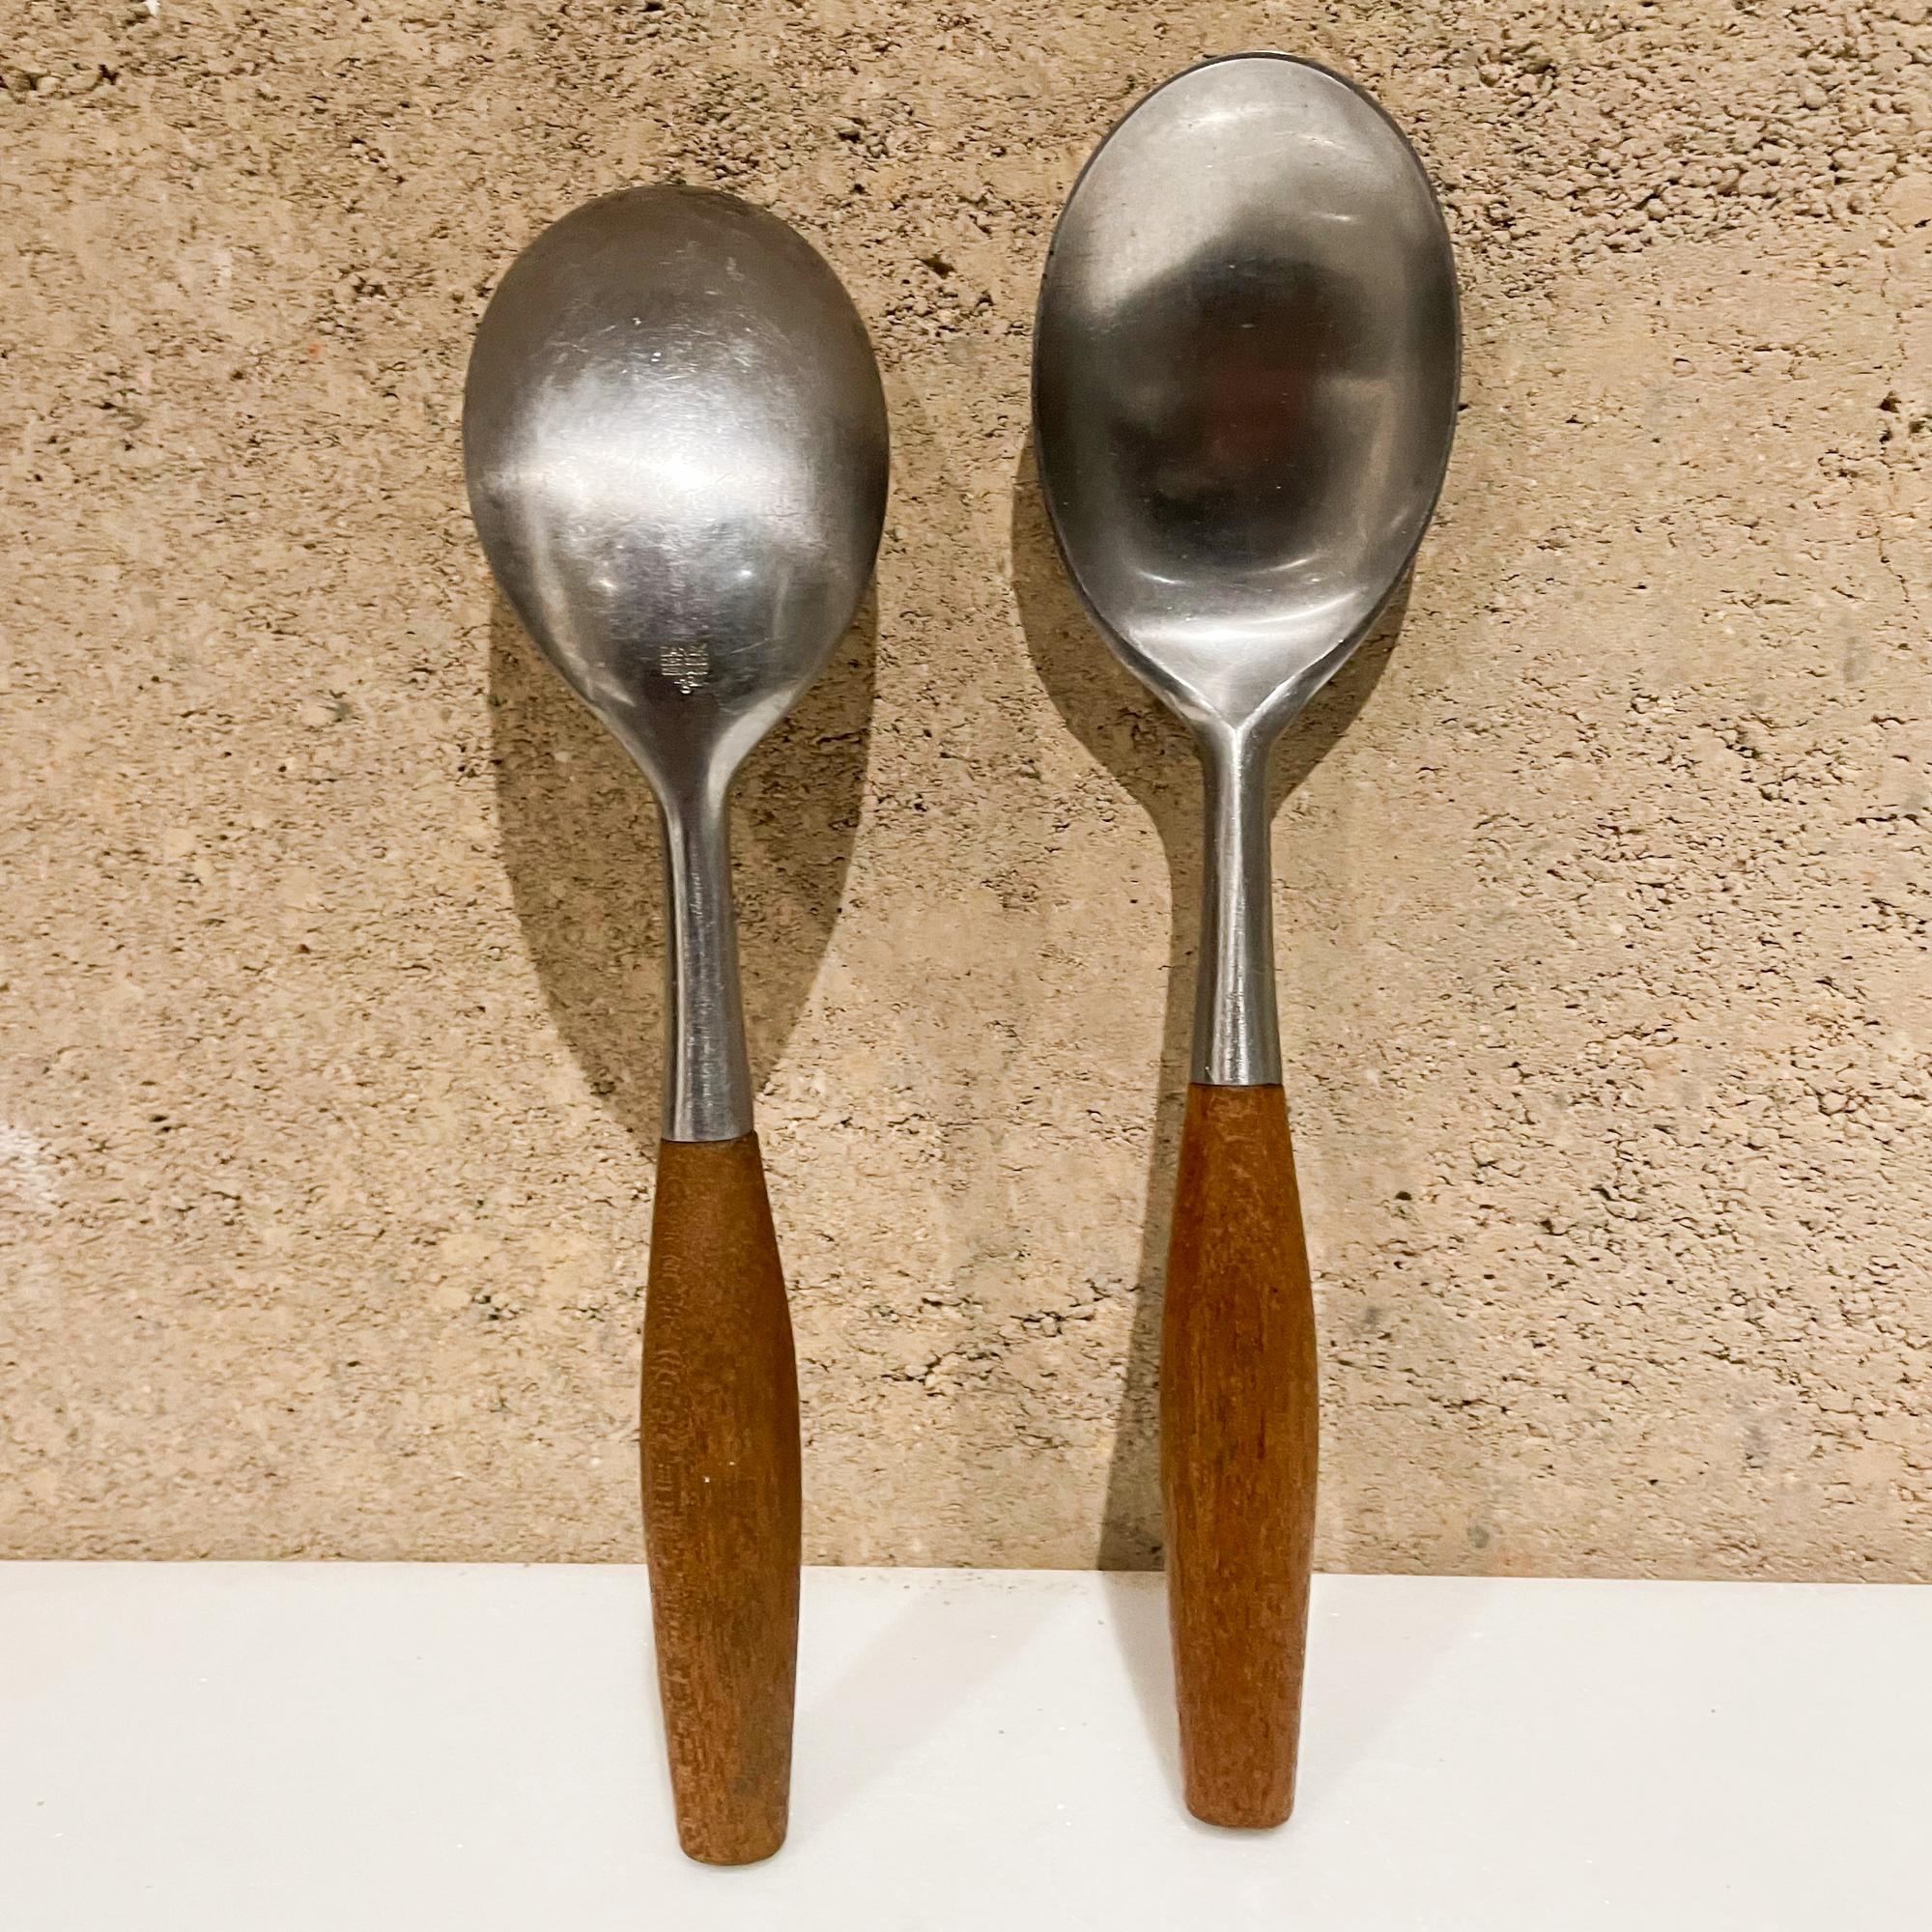  1954 Dansk IHQ Fjord 2 Large Spoons Teak & Stainless Jens Quistgaard Germany 1